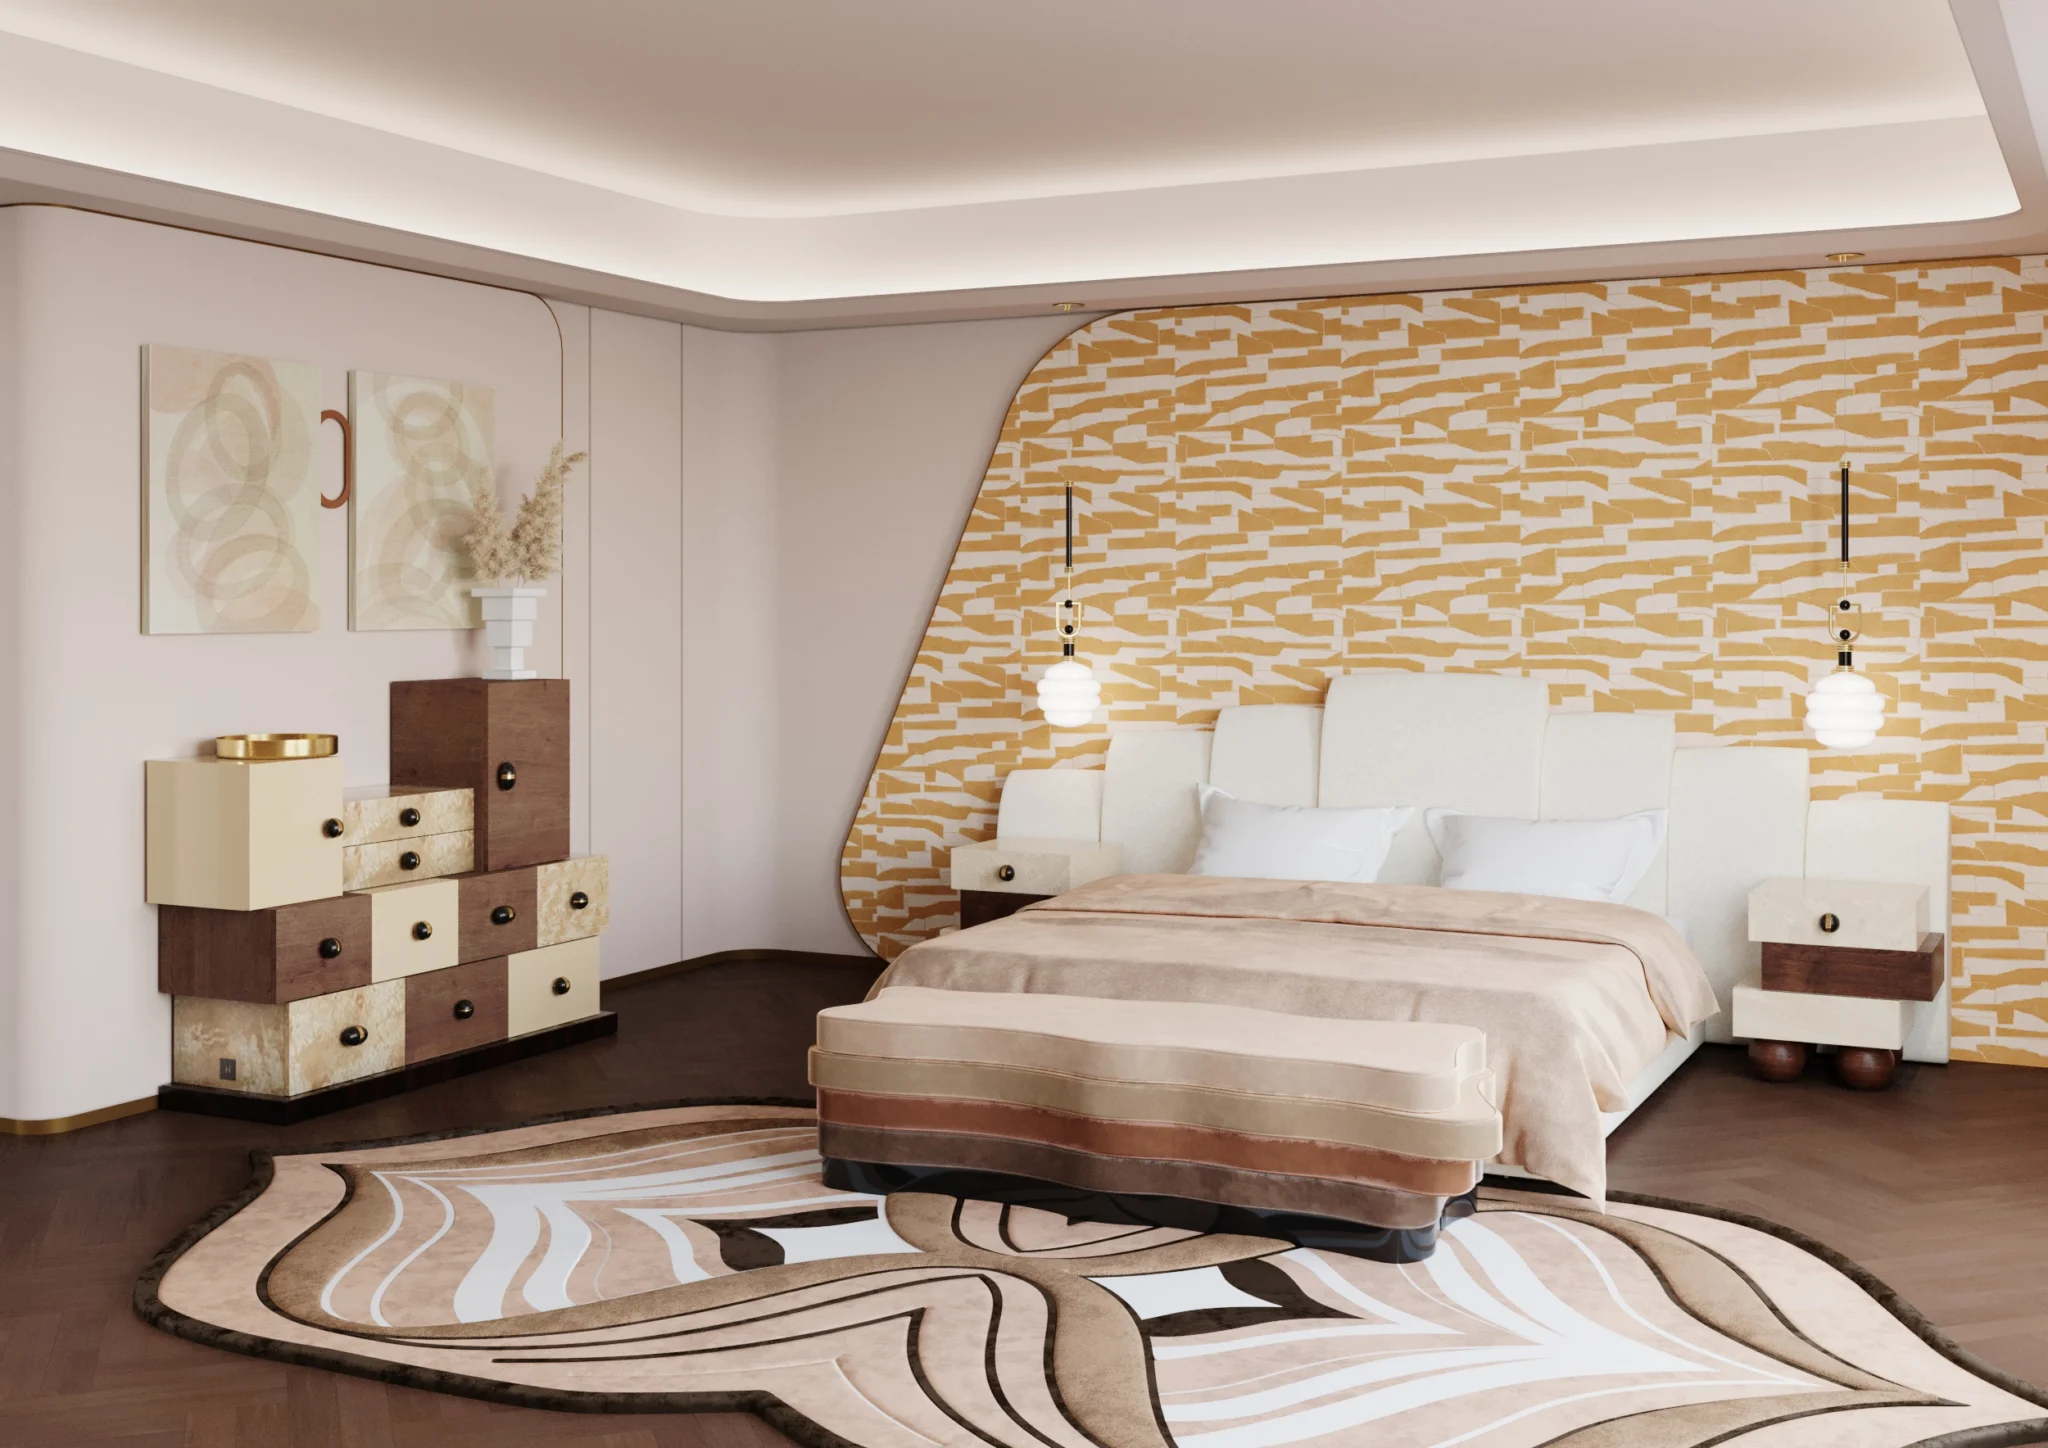 luxurious bedroom in beige, brown and peachy hues